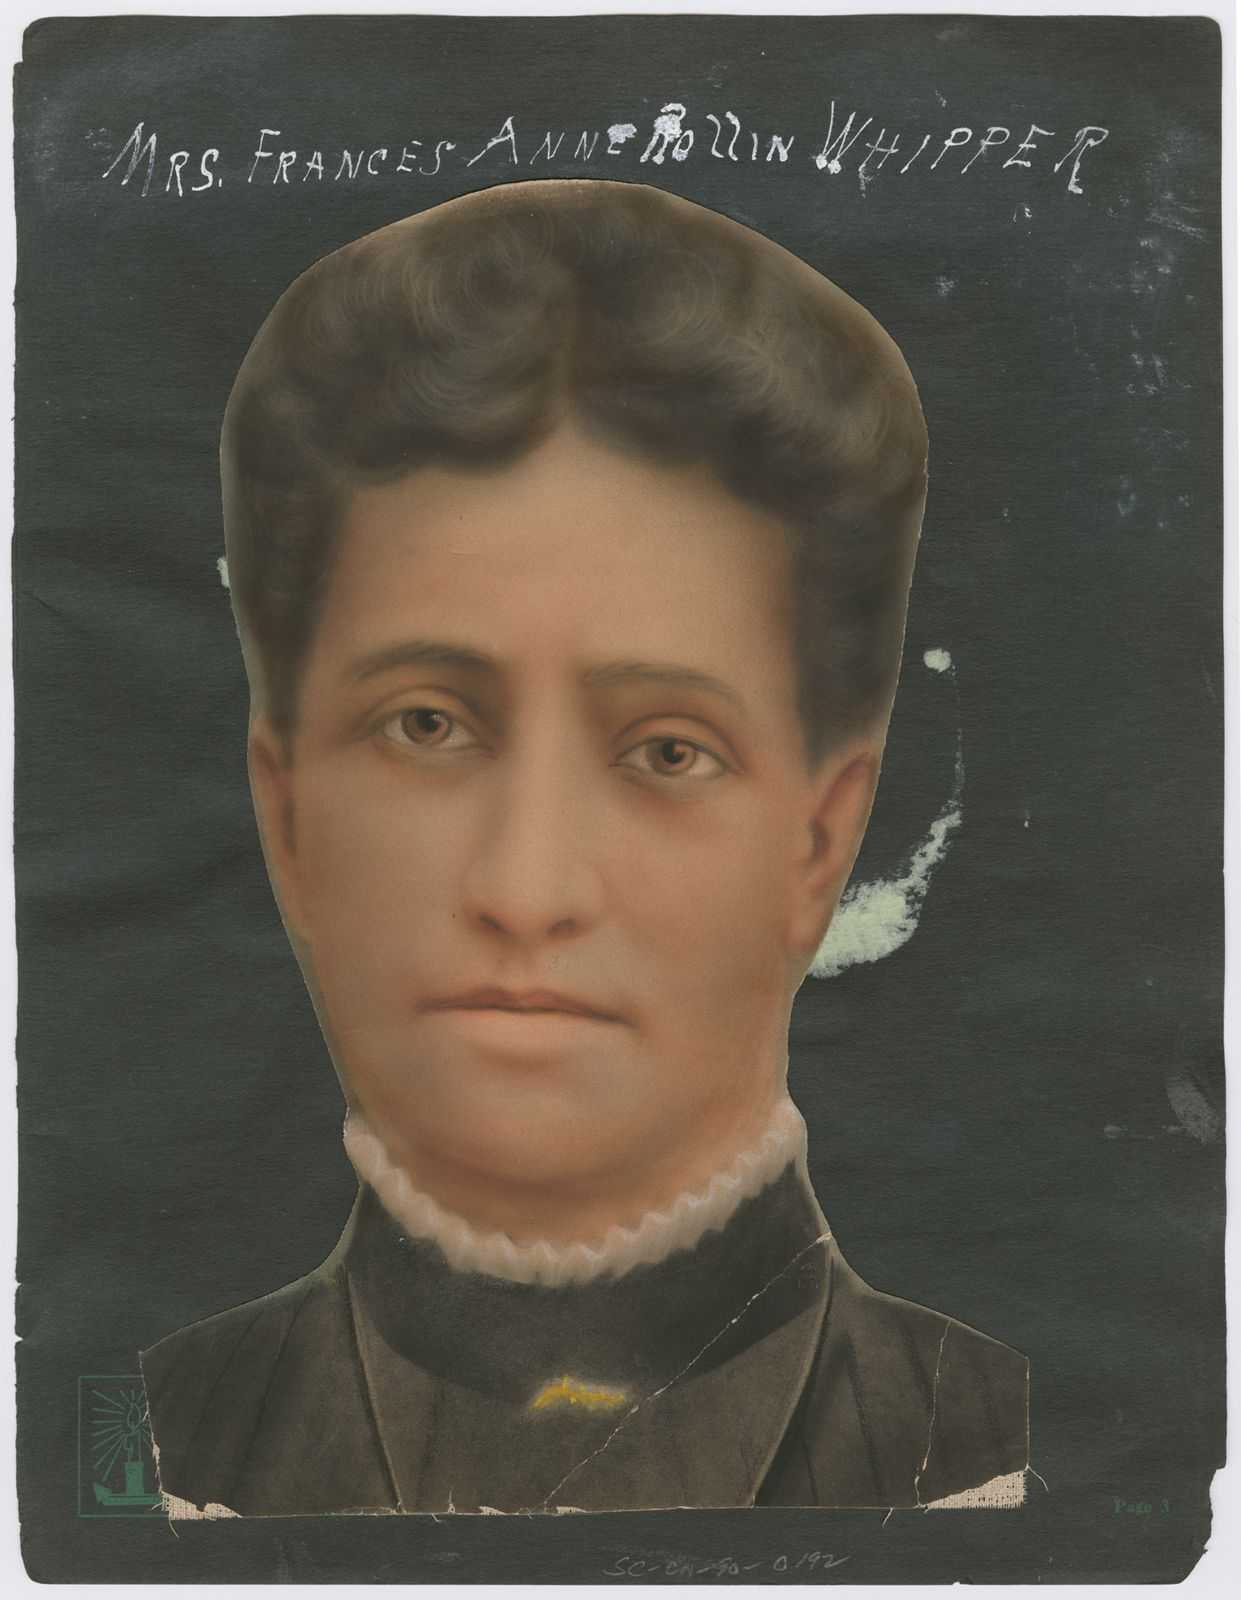 Portrait of woman that reads "Portrait of Mrs. Frances Anne Rollin Whipper."